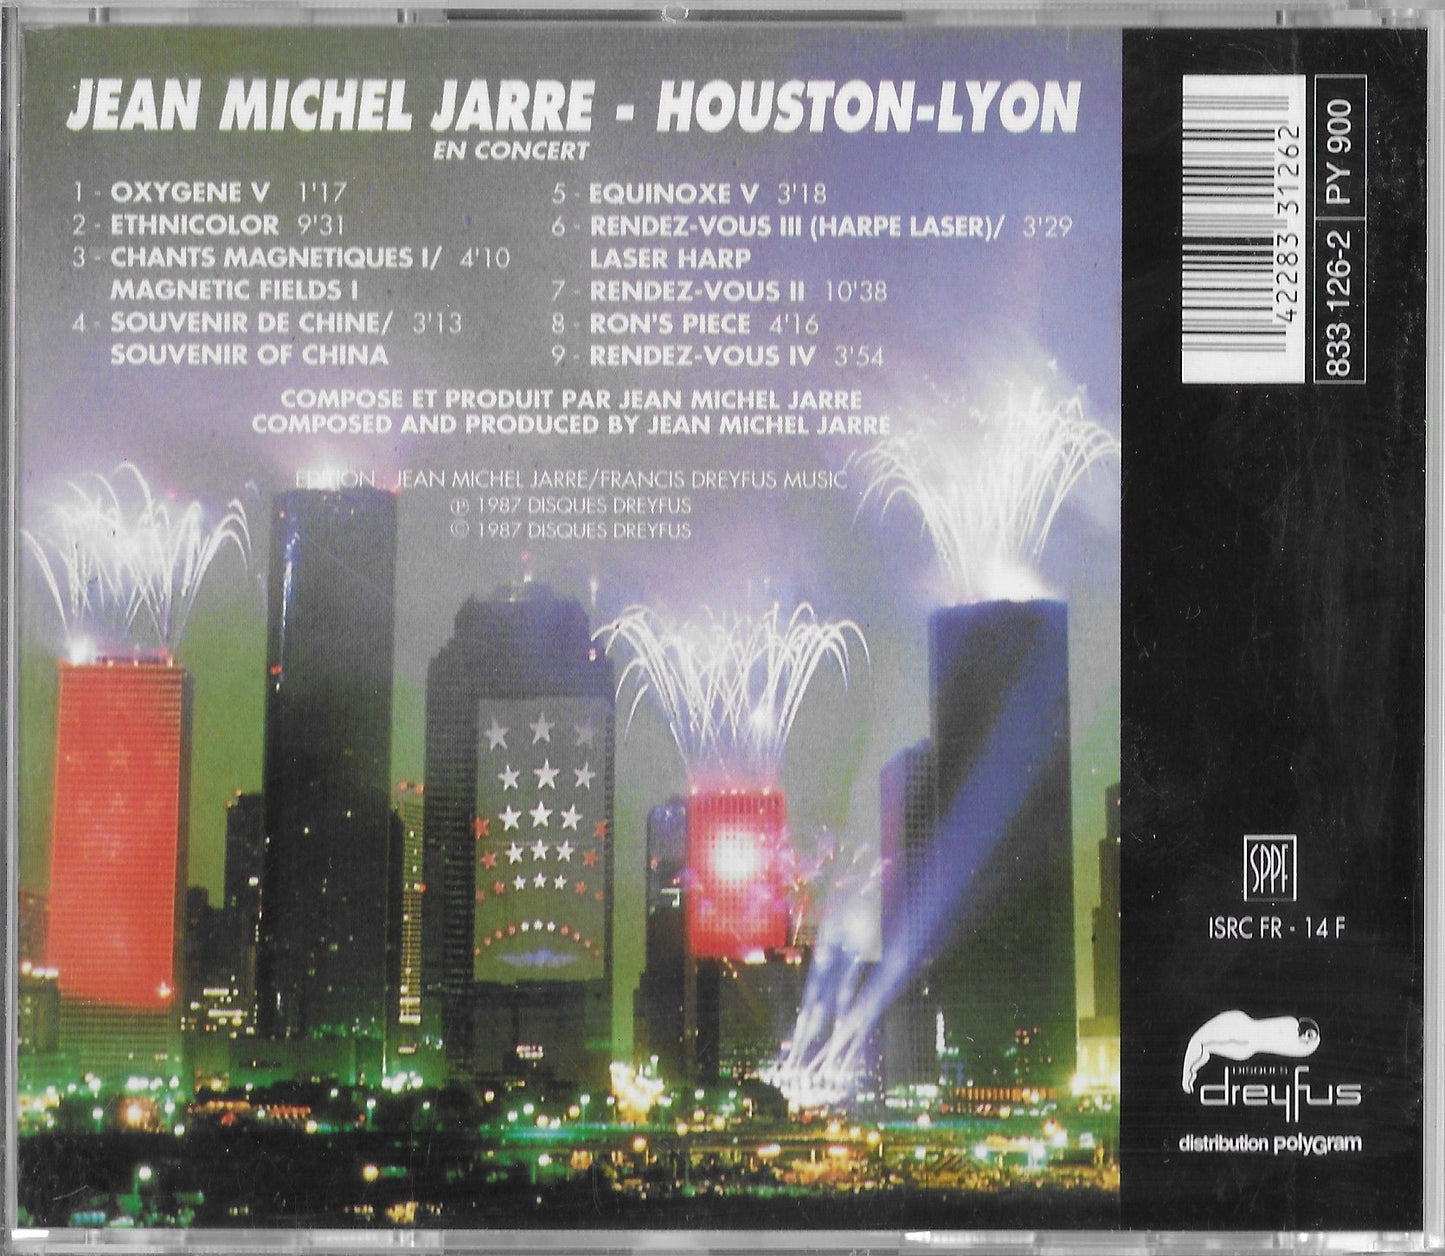 JEAN MICHEL JARRE - En Concert Houston-Lyon